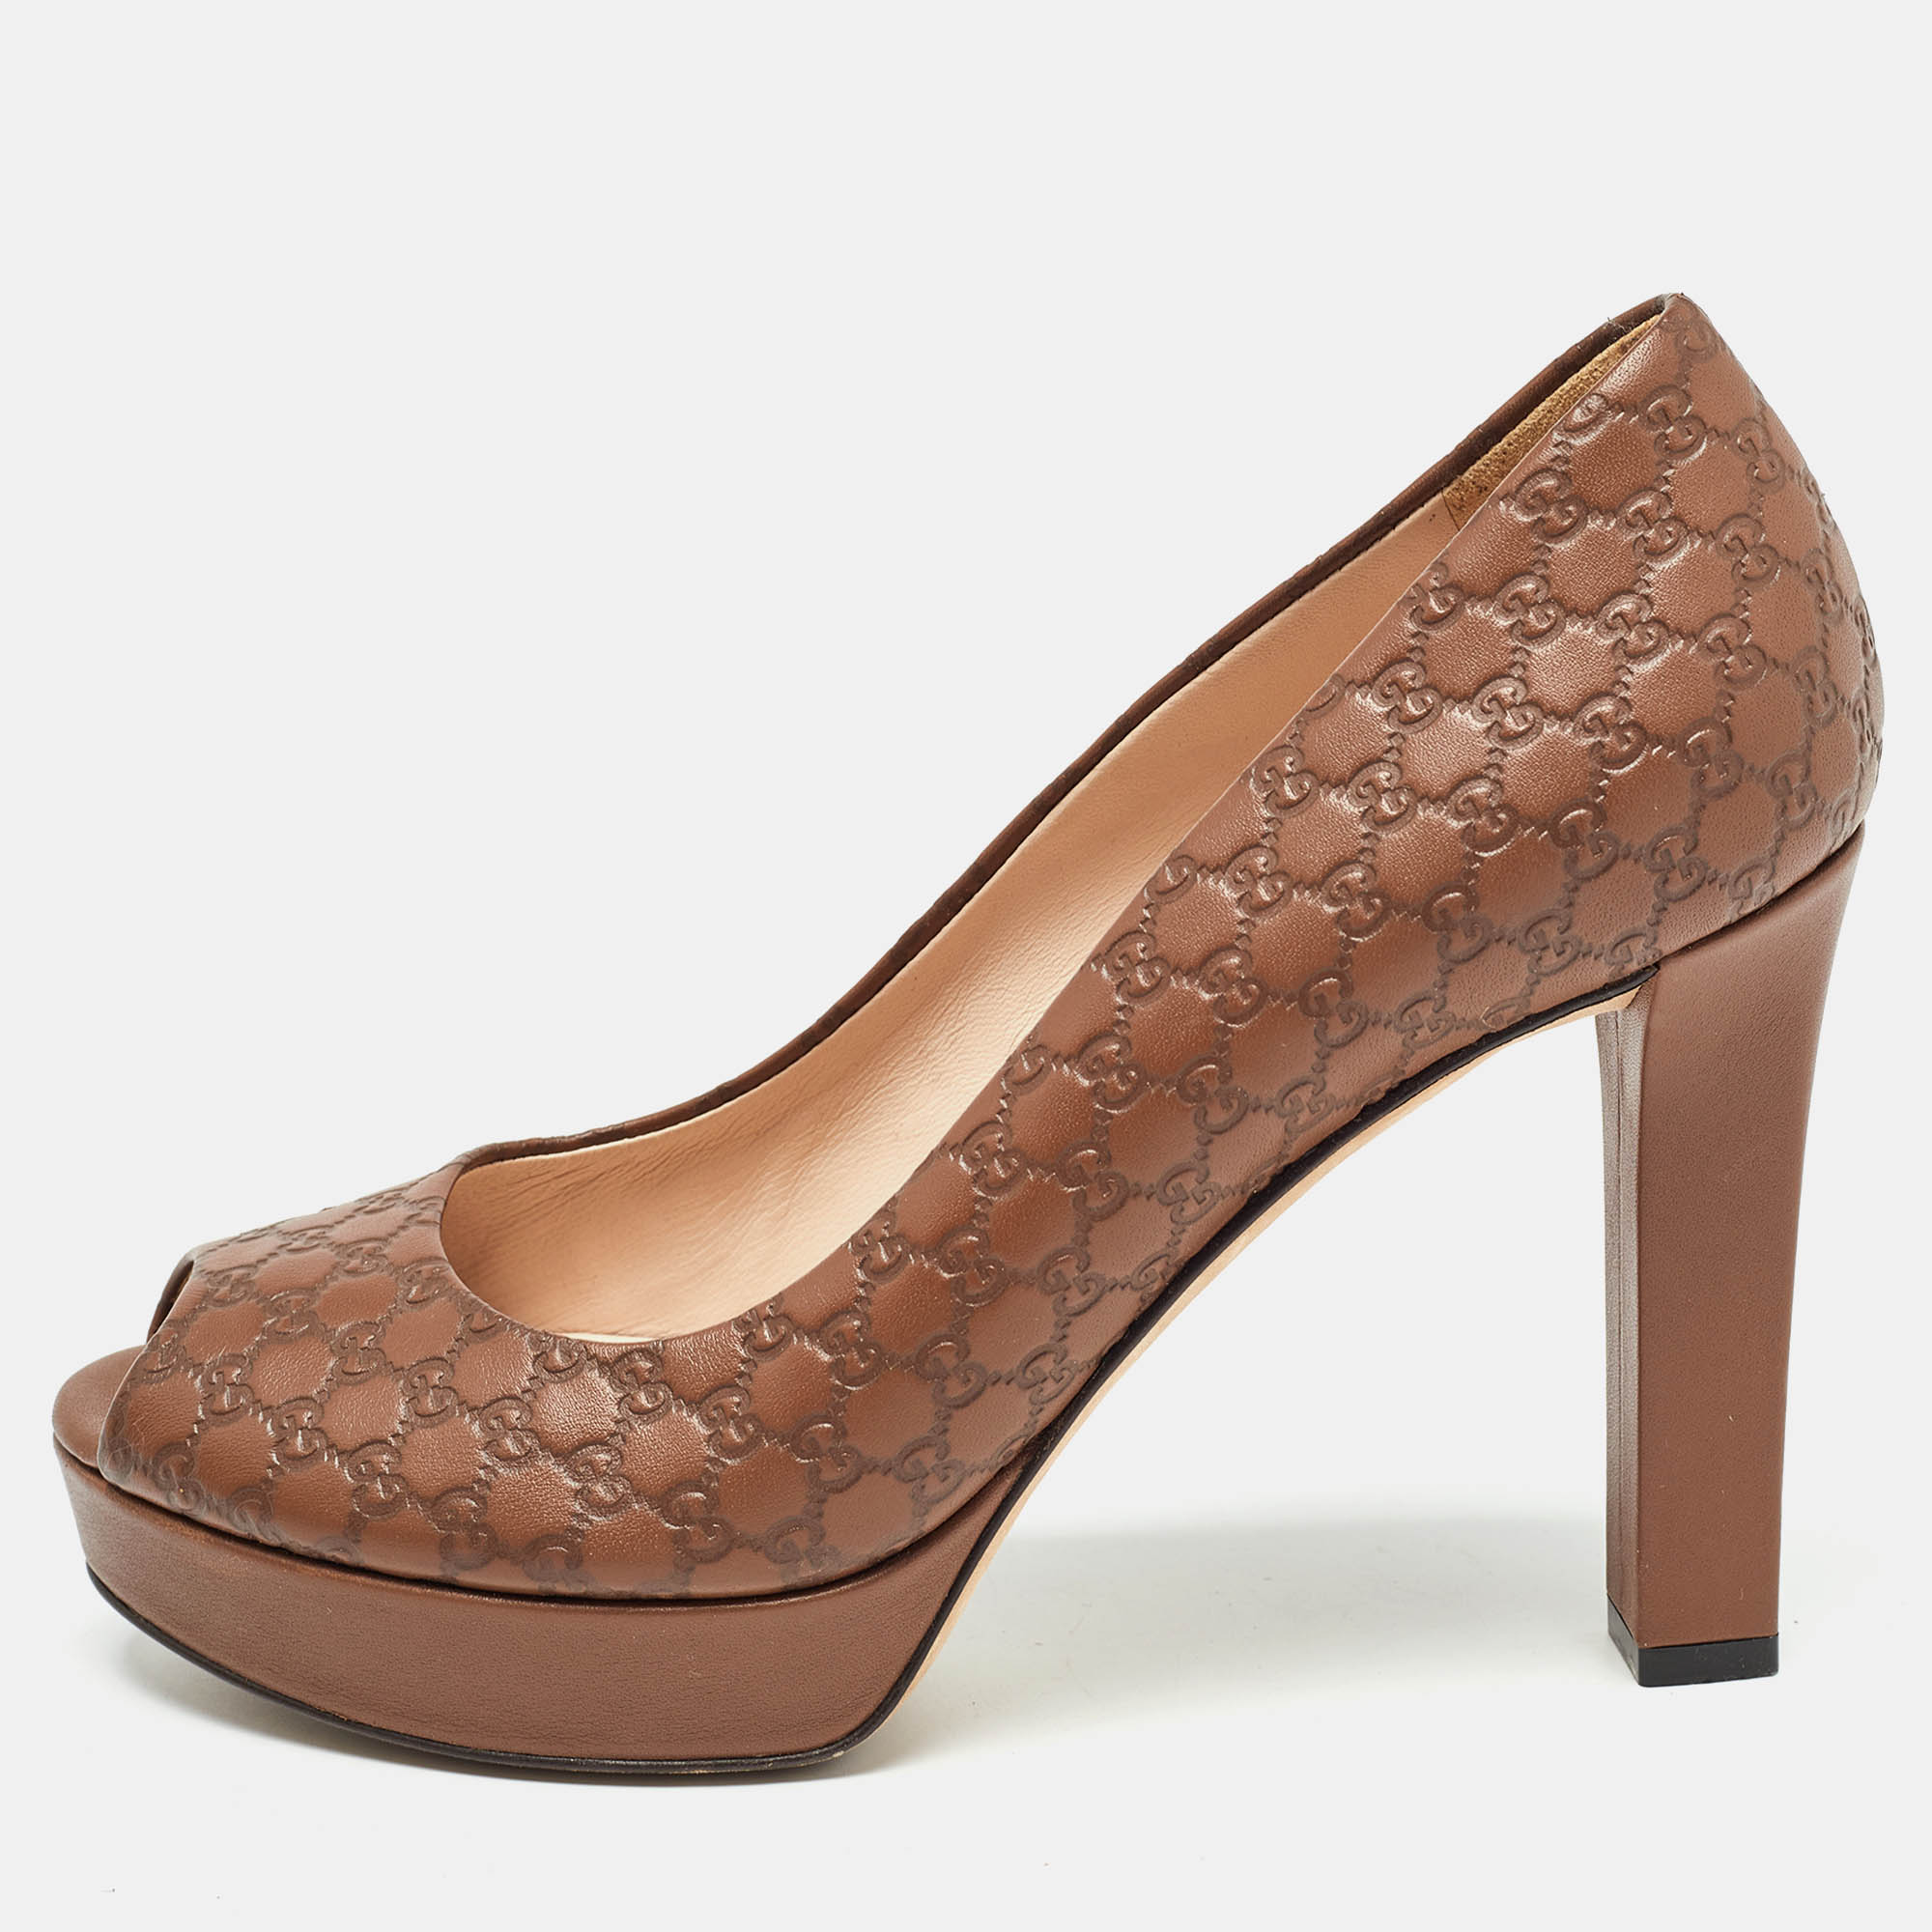 Gucci brown microguccissima leather peep toe platform pumps size 37.5